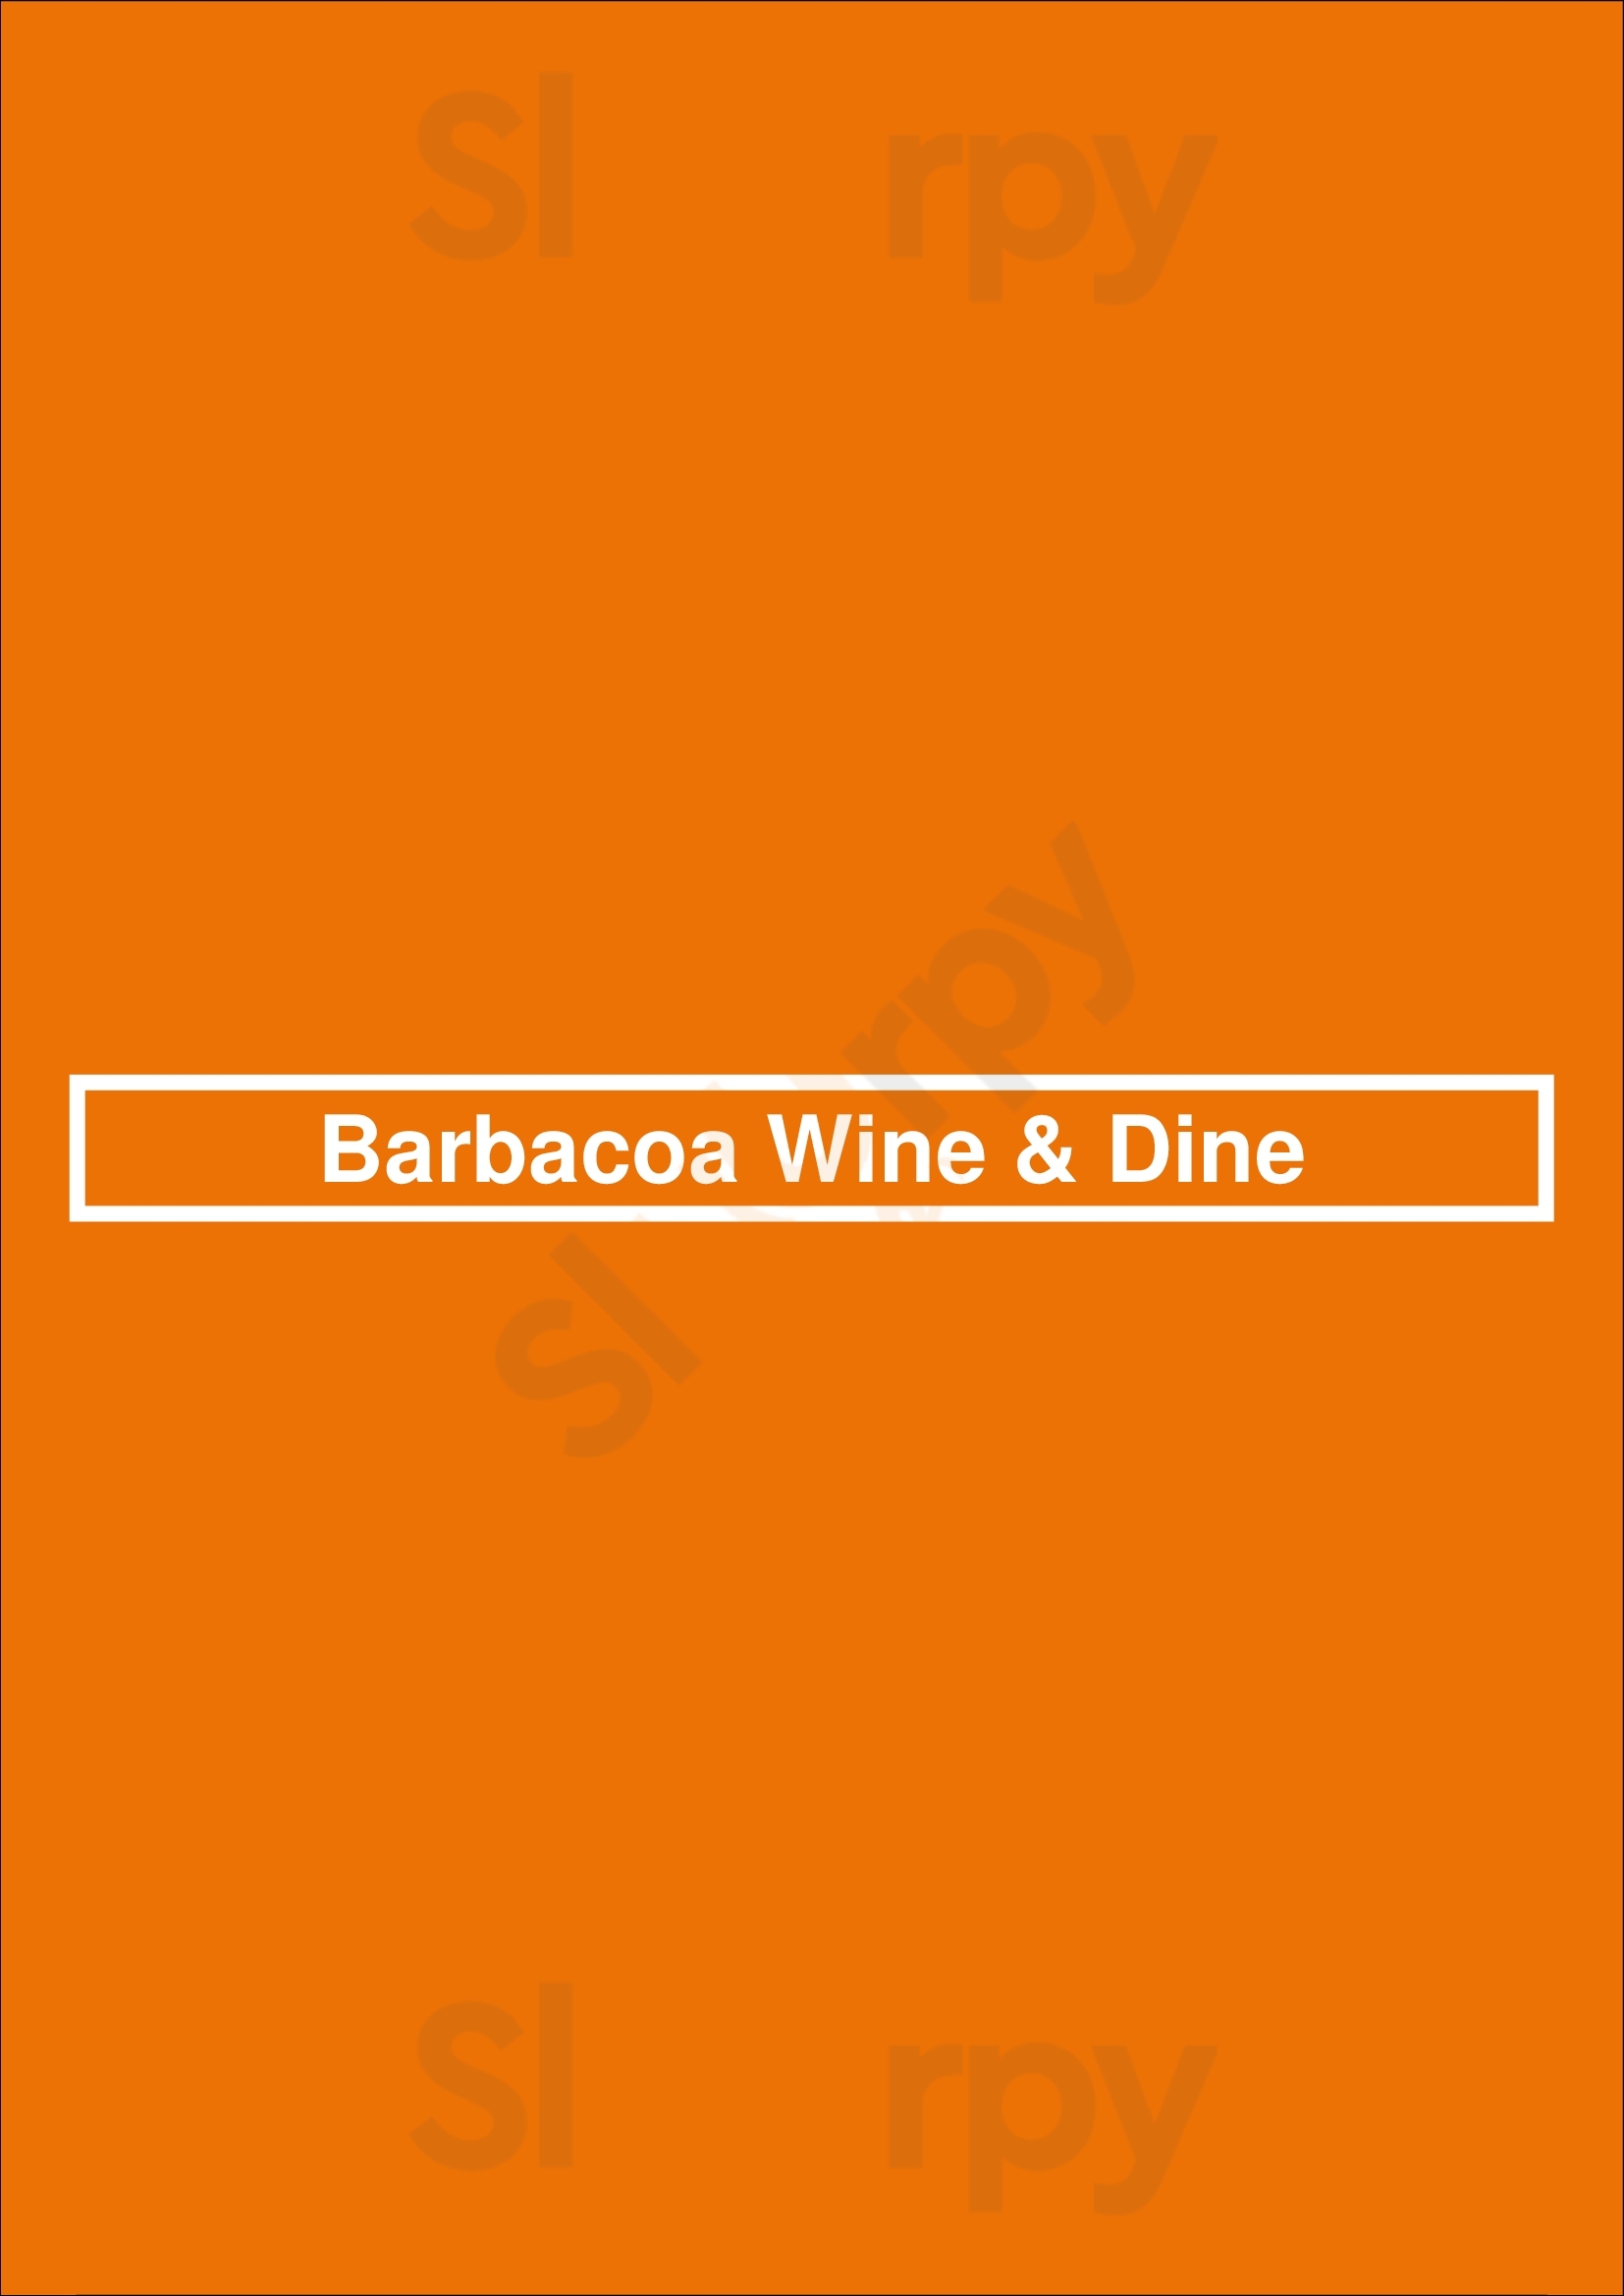 Barbacoa Wine & Dine Maasmechelen Menu - 1